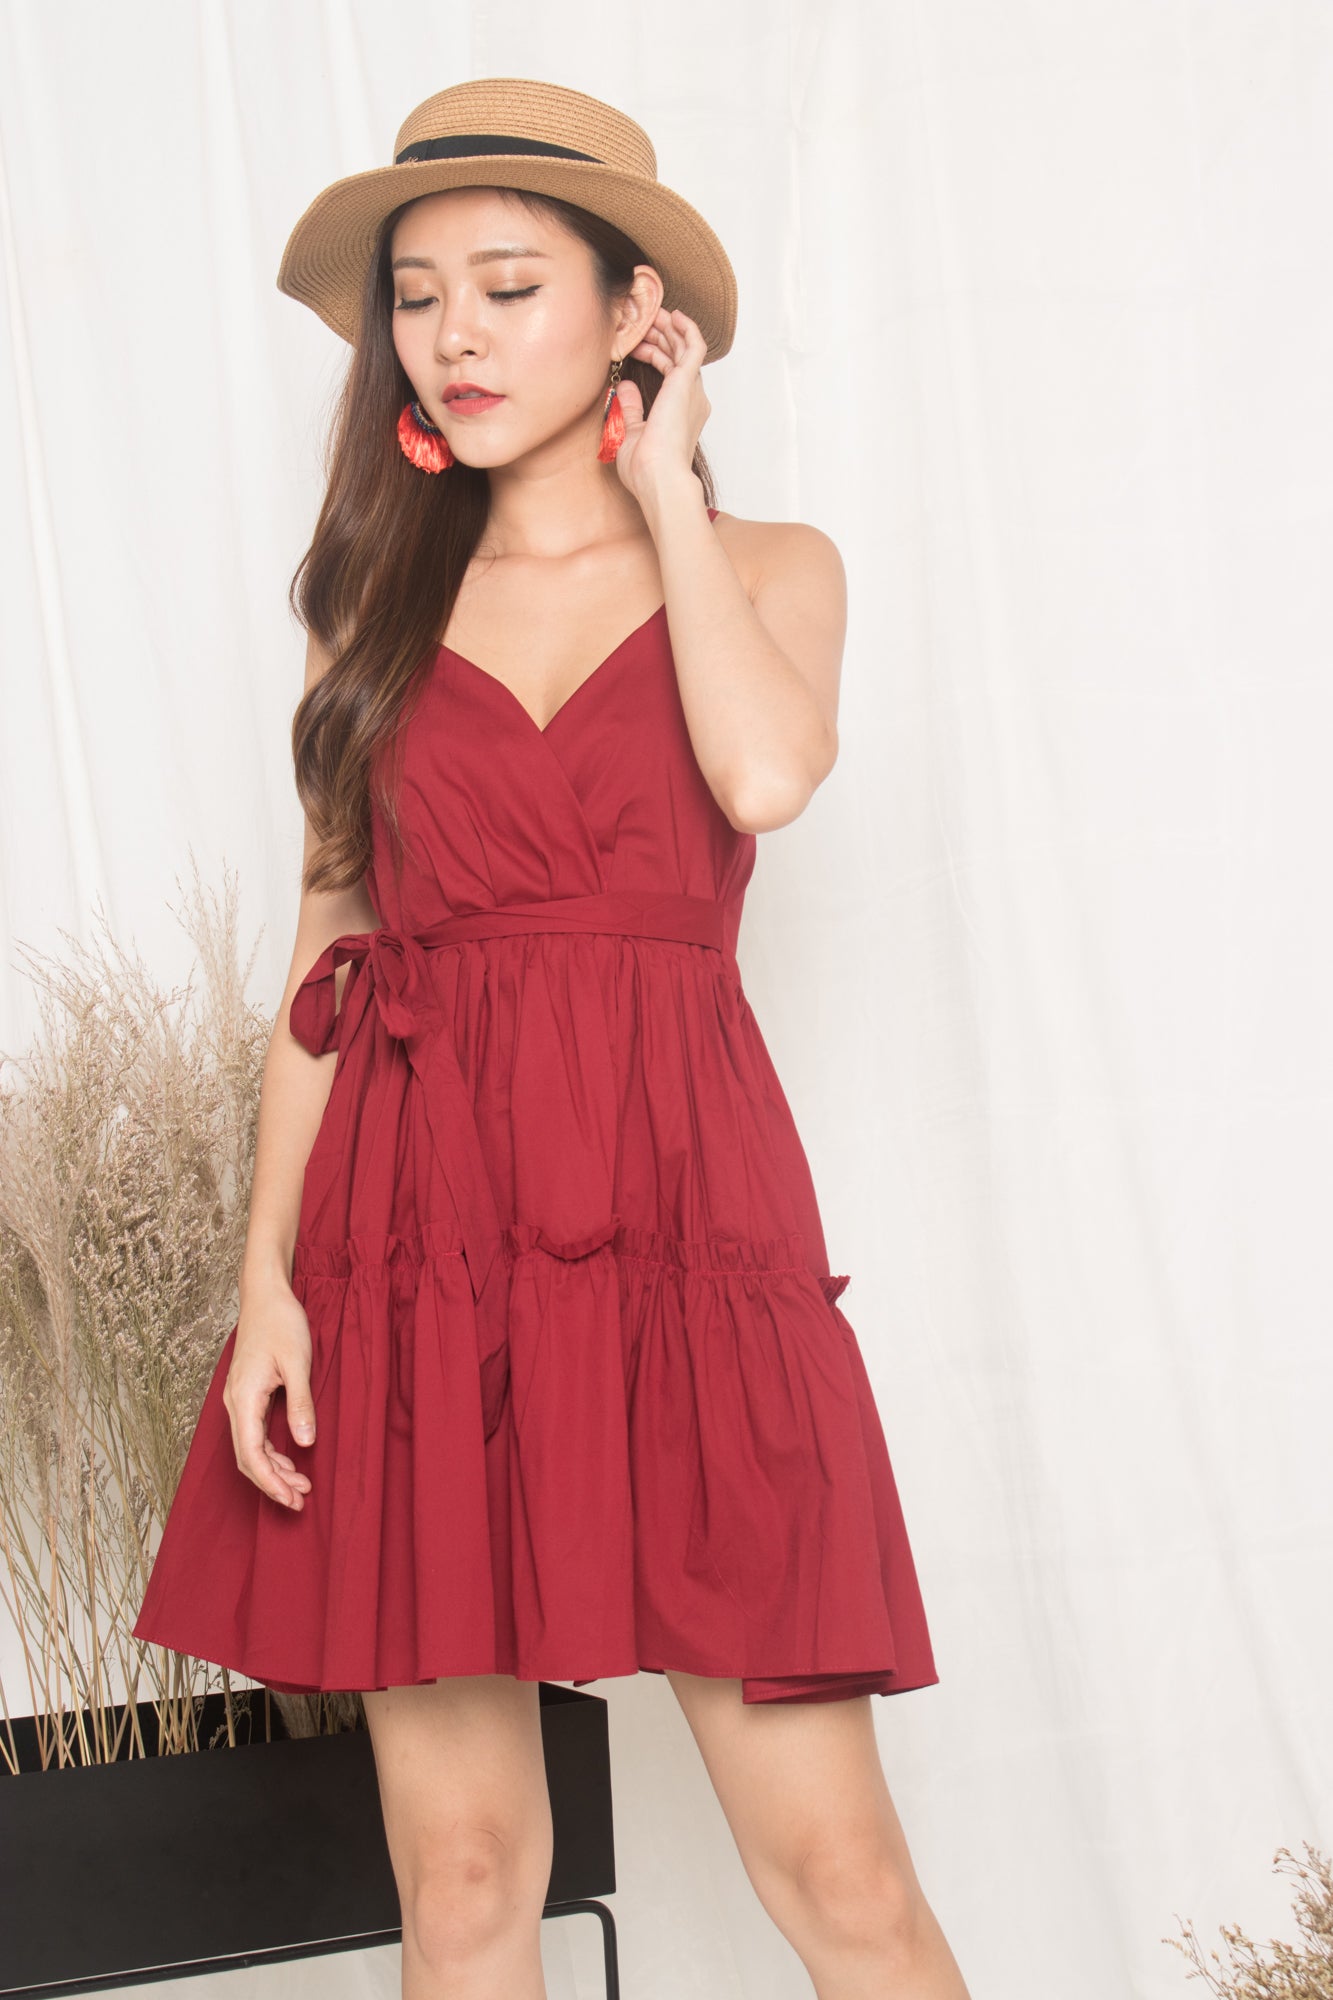 Oksar Layer Dress in Burgundy Red